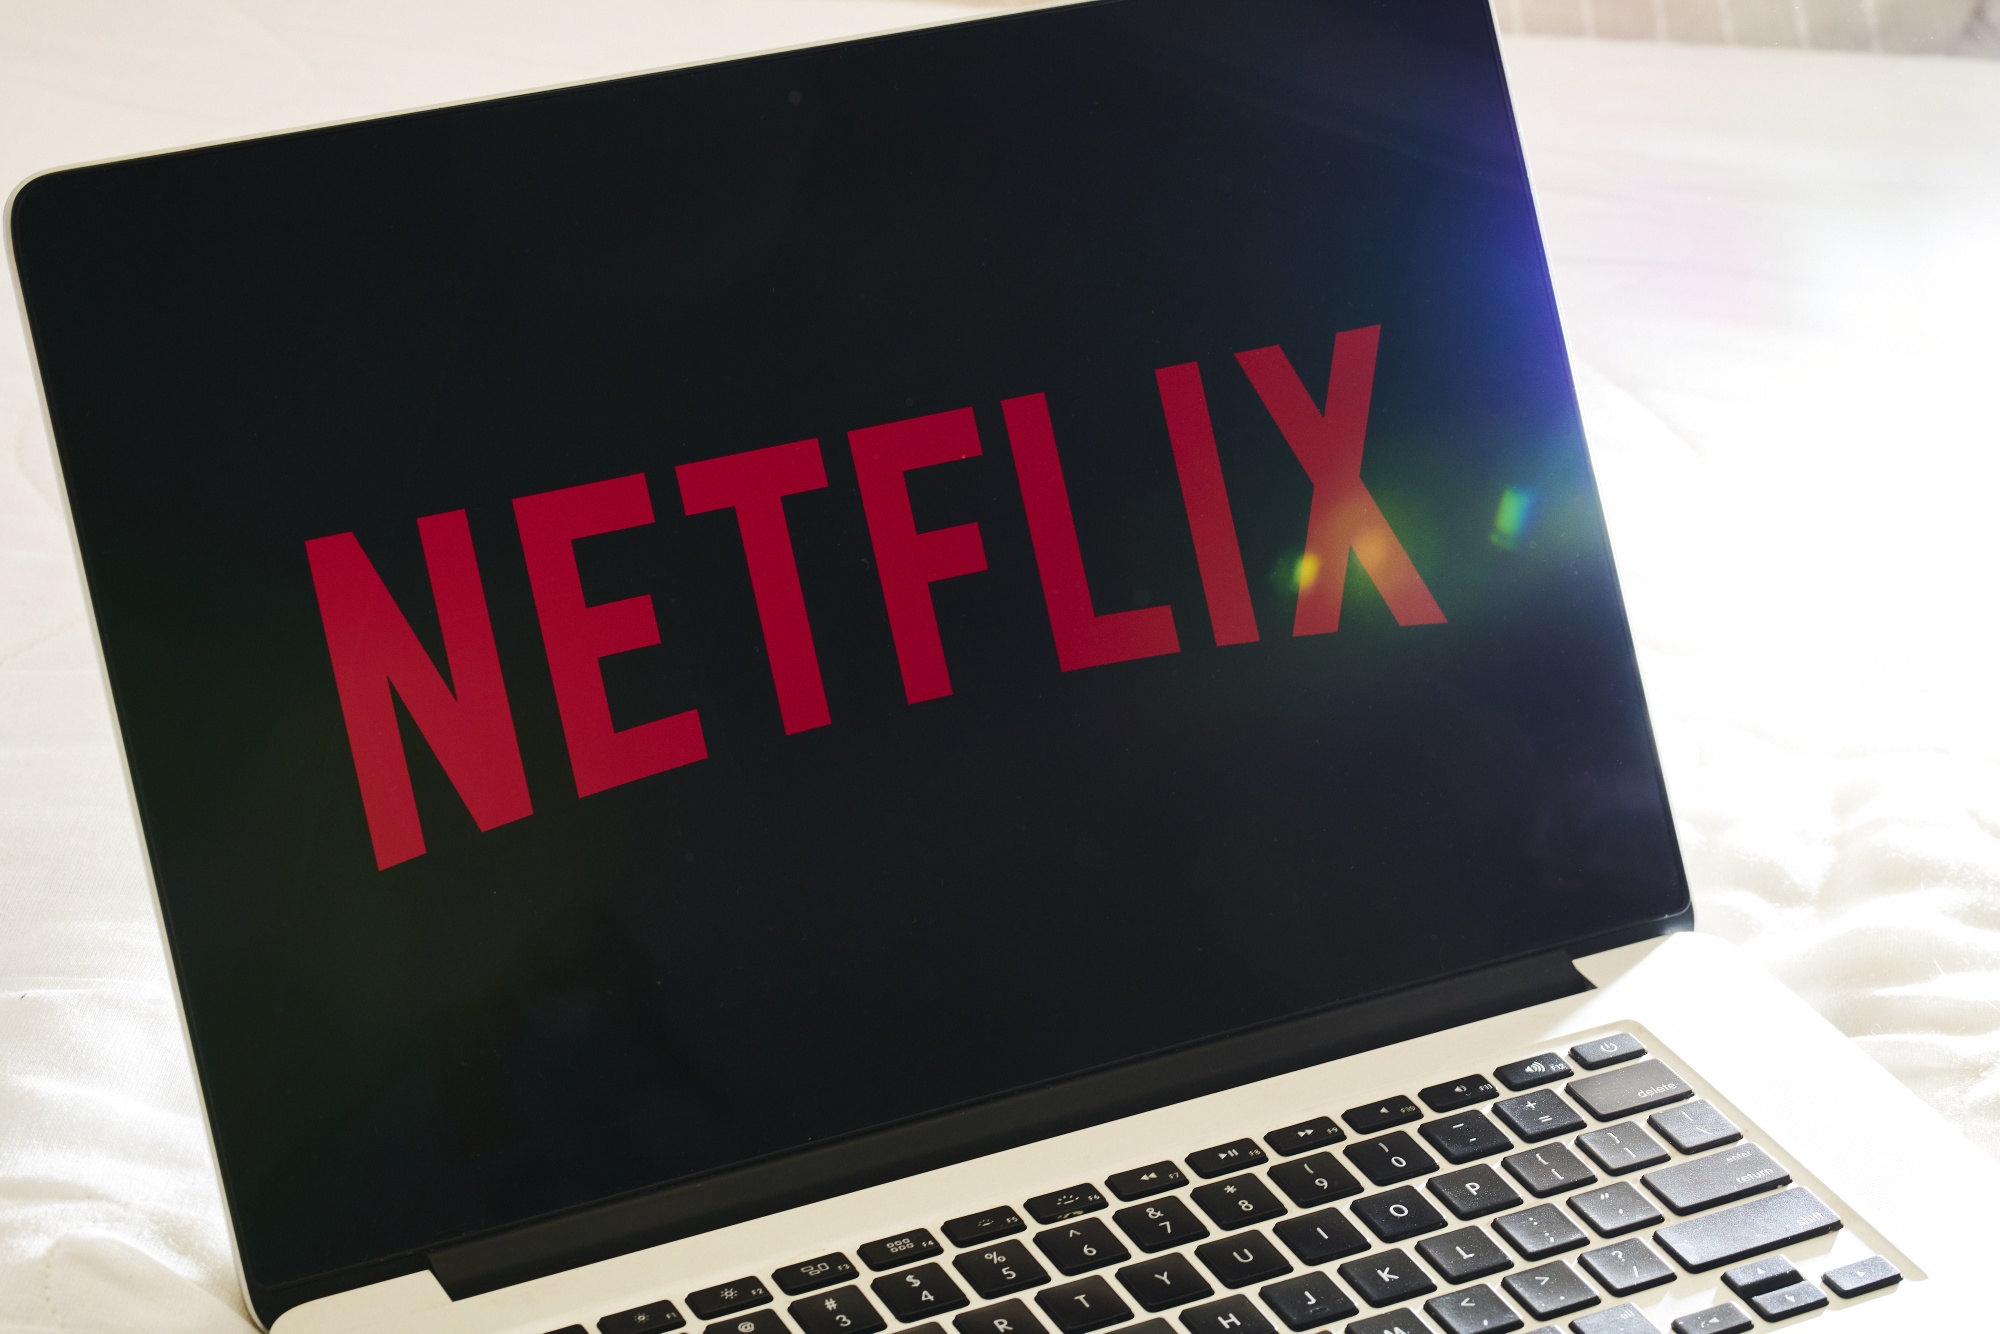 Netflix Inc. Illustrations As Streaming Company Dominates Golden Globe Nominations 